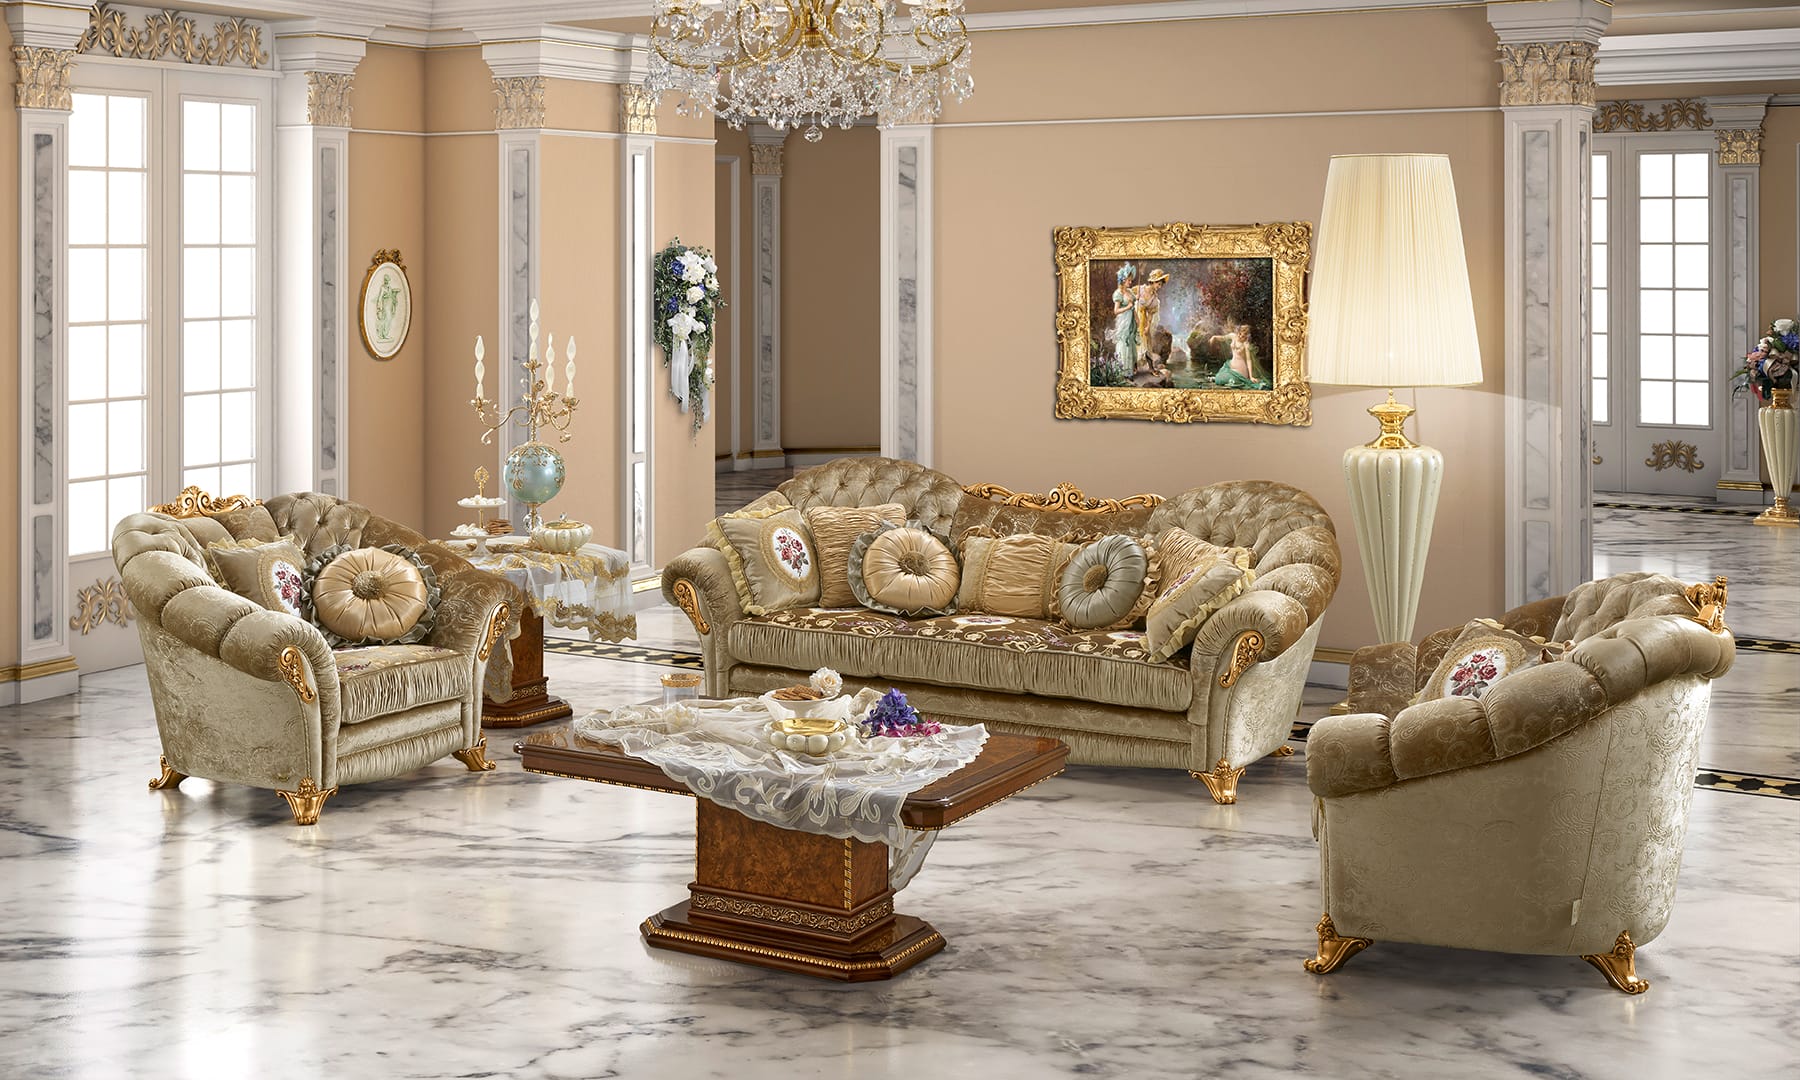 Luxury Sofa - Luxury Classic Furniture Italian Style Hand Carving